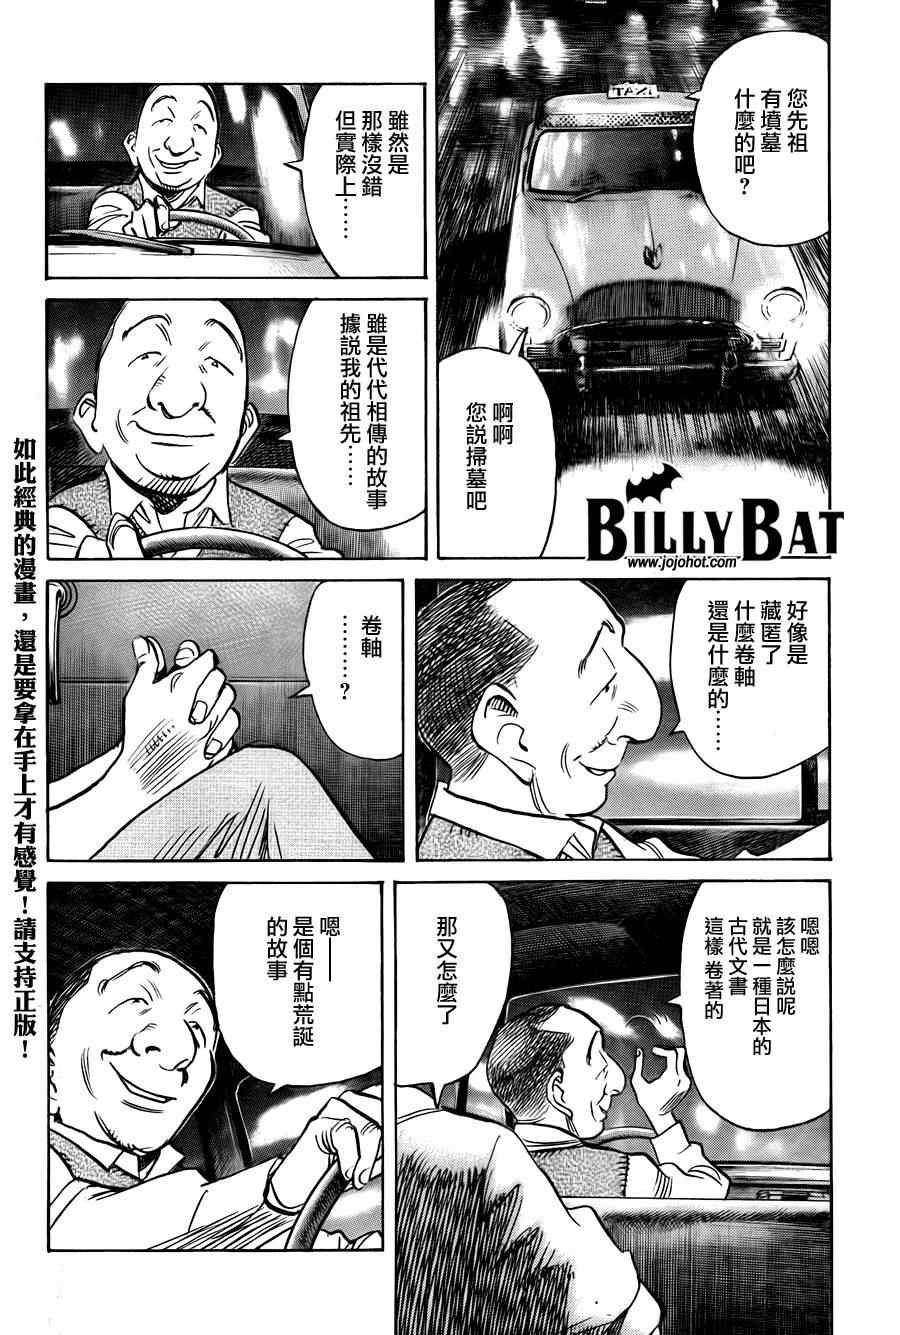 Billy_Bat - 第63話 - 3